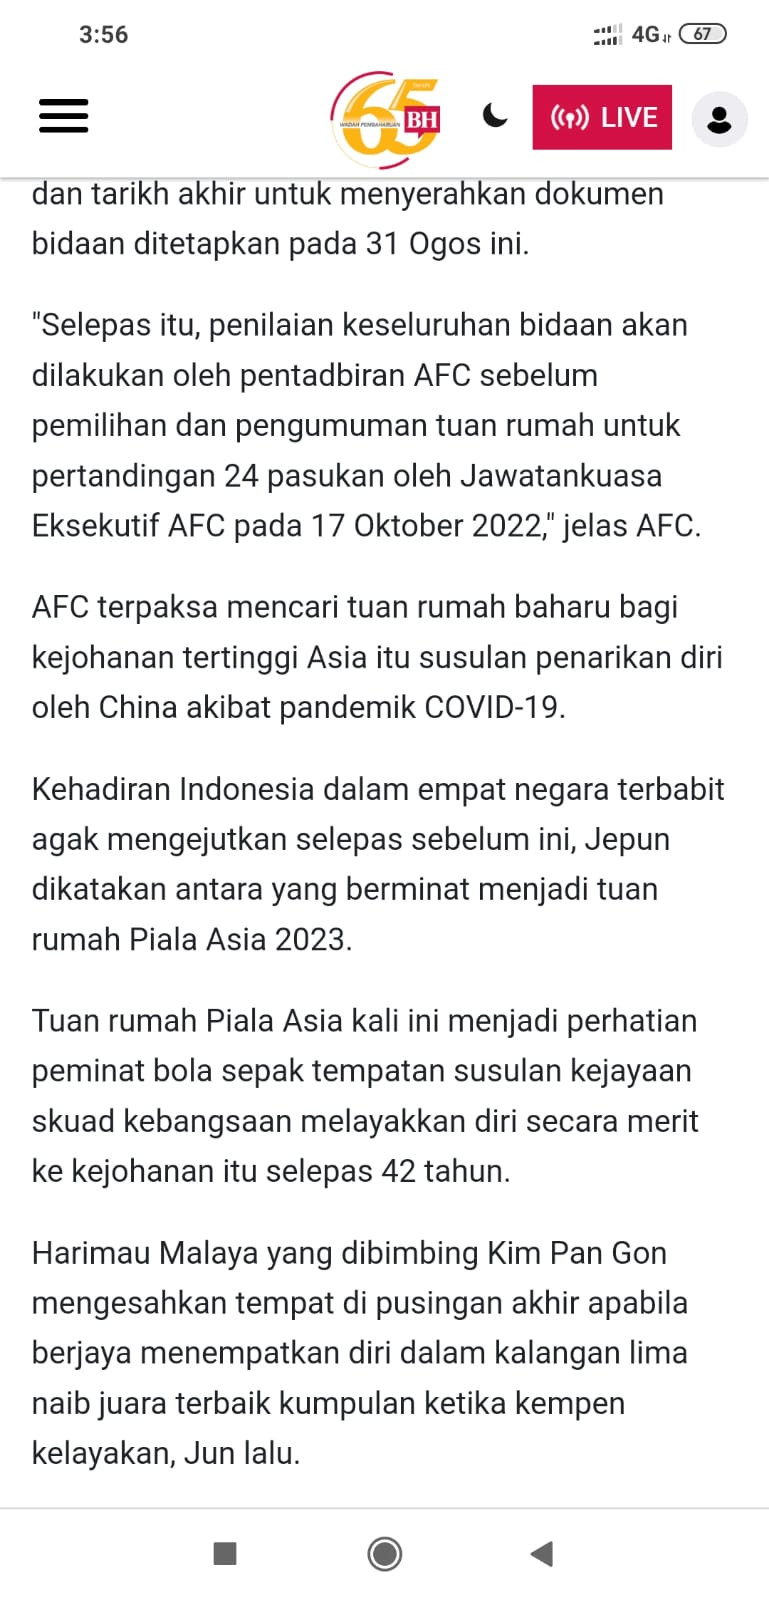 Media Malaysia Tak Percaya Indonesia Tuan Rumah Piala Asia 2023